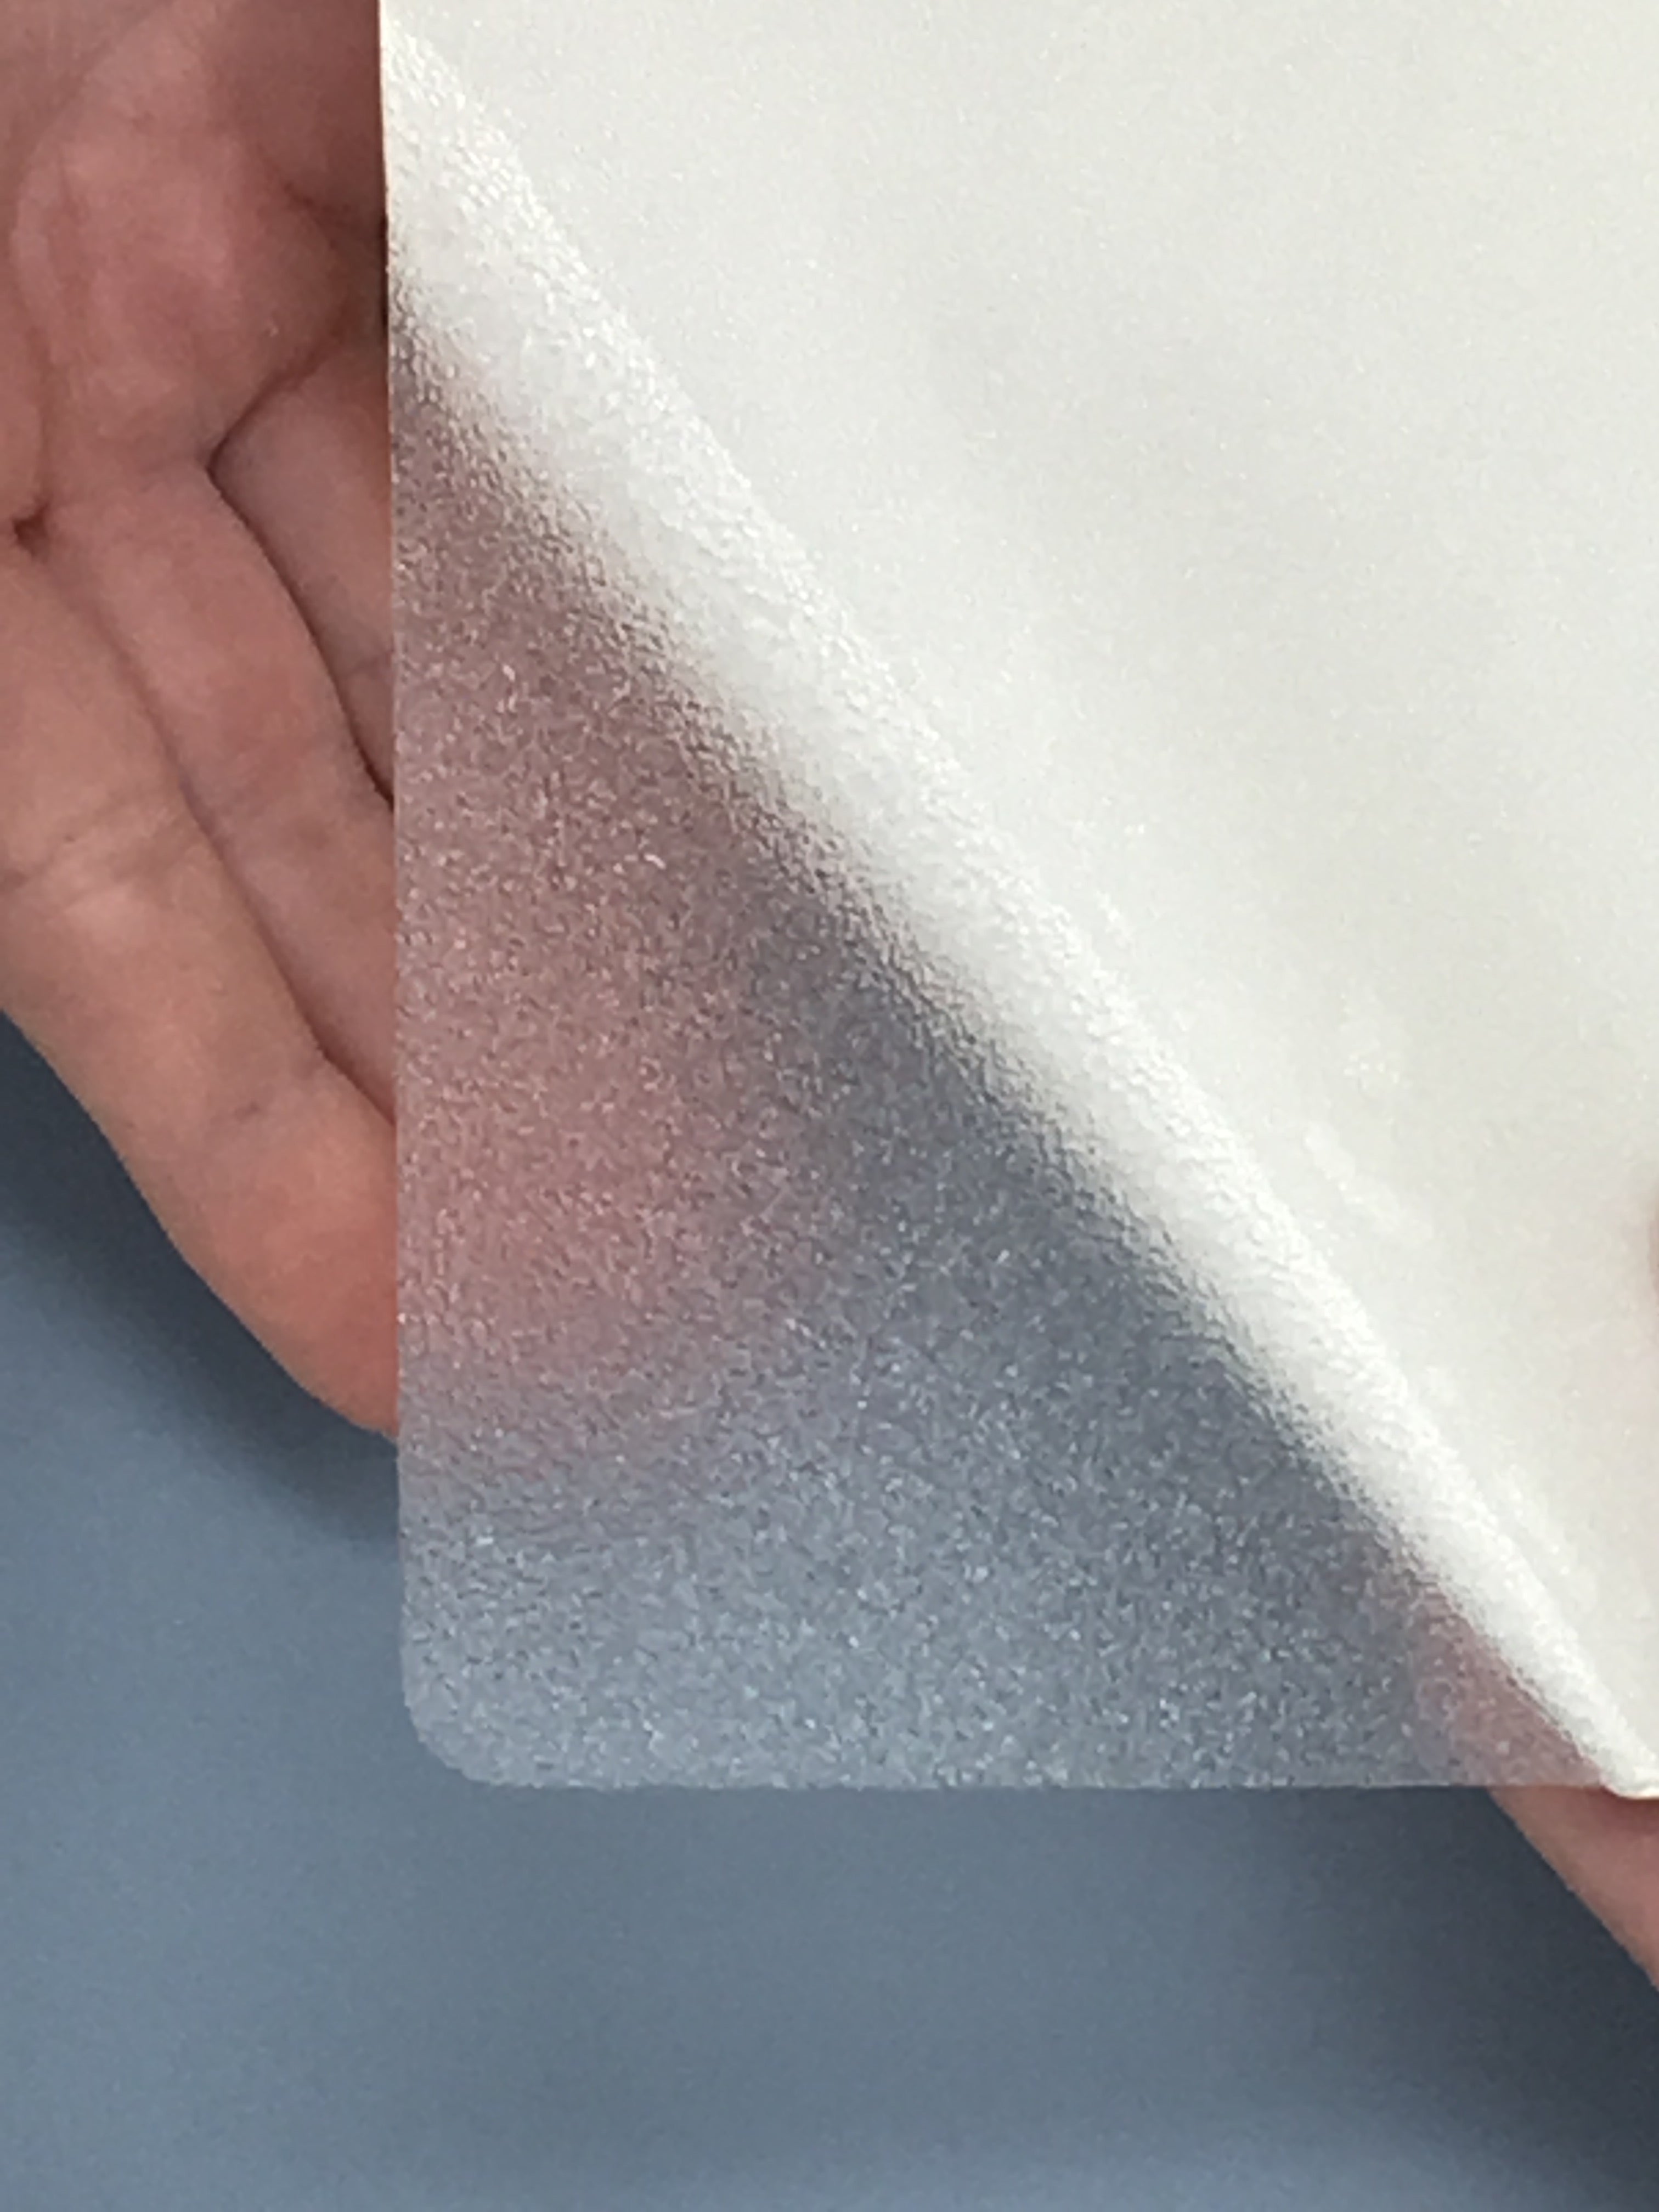 HANDITREADS Non-Slip Shower Mat, 24 x 24, Clear, Adhesive, Mold